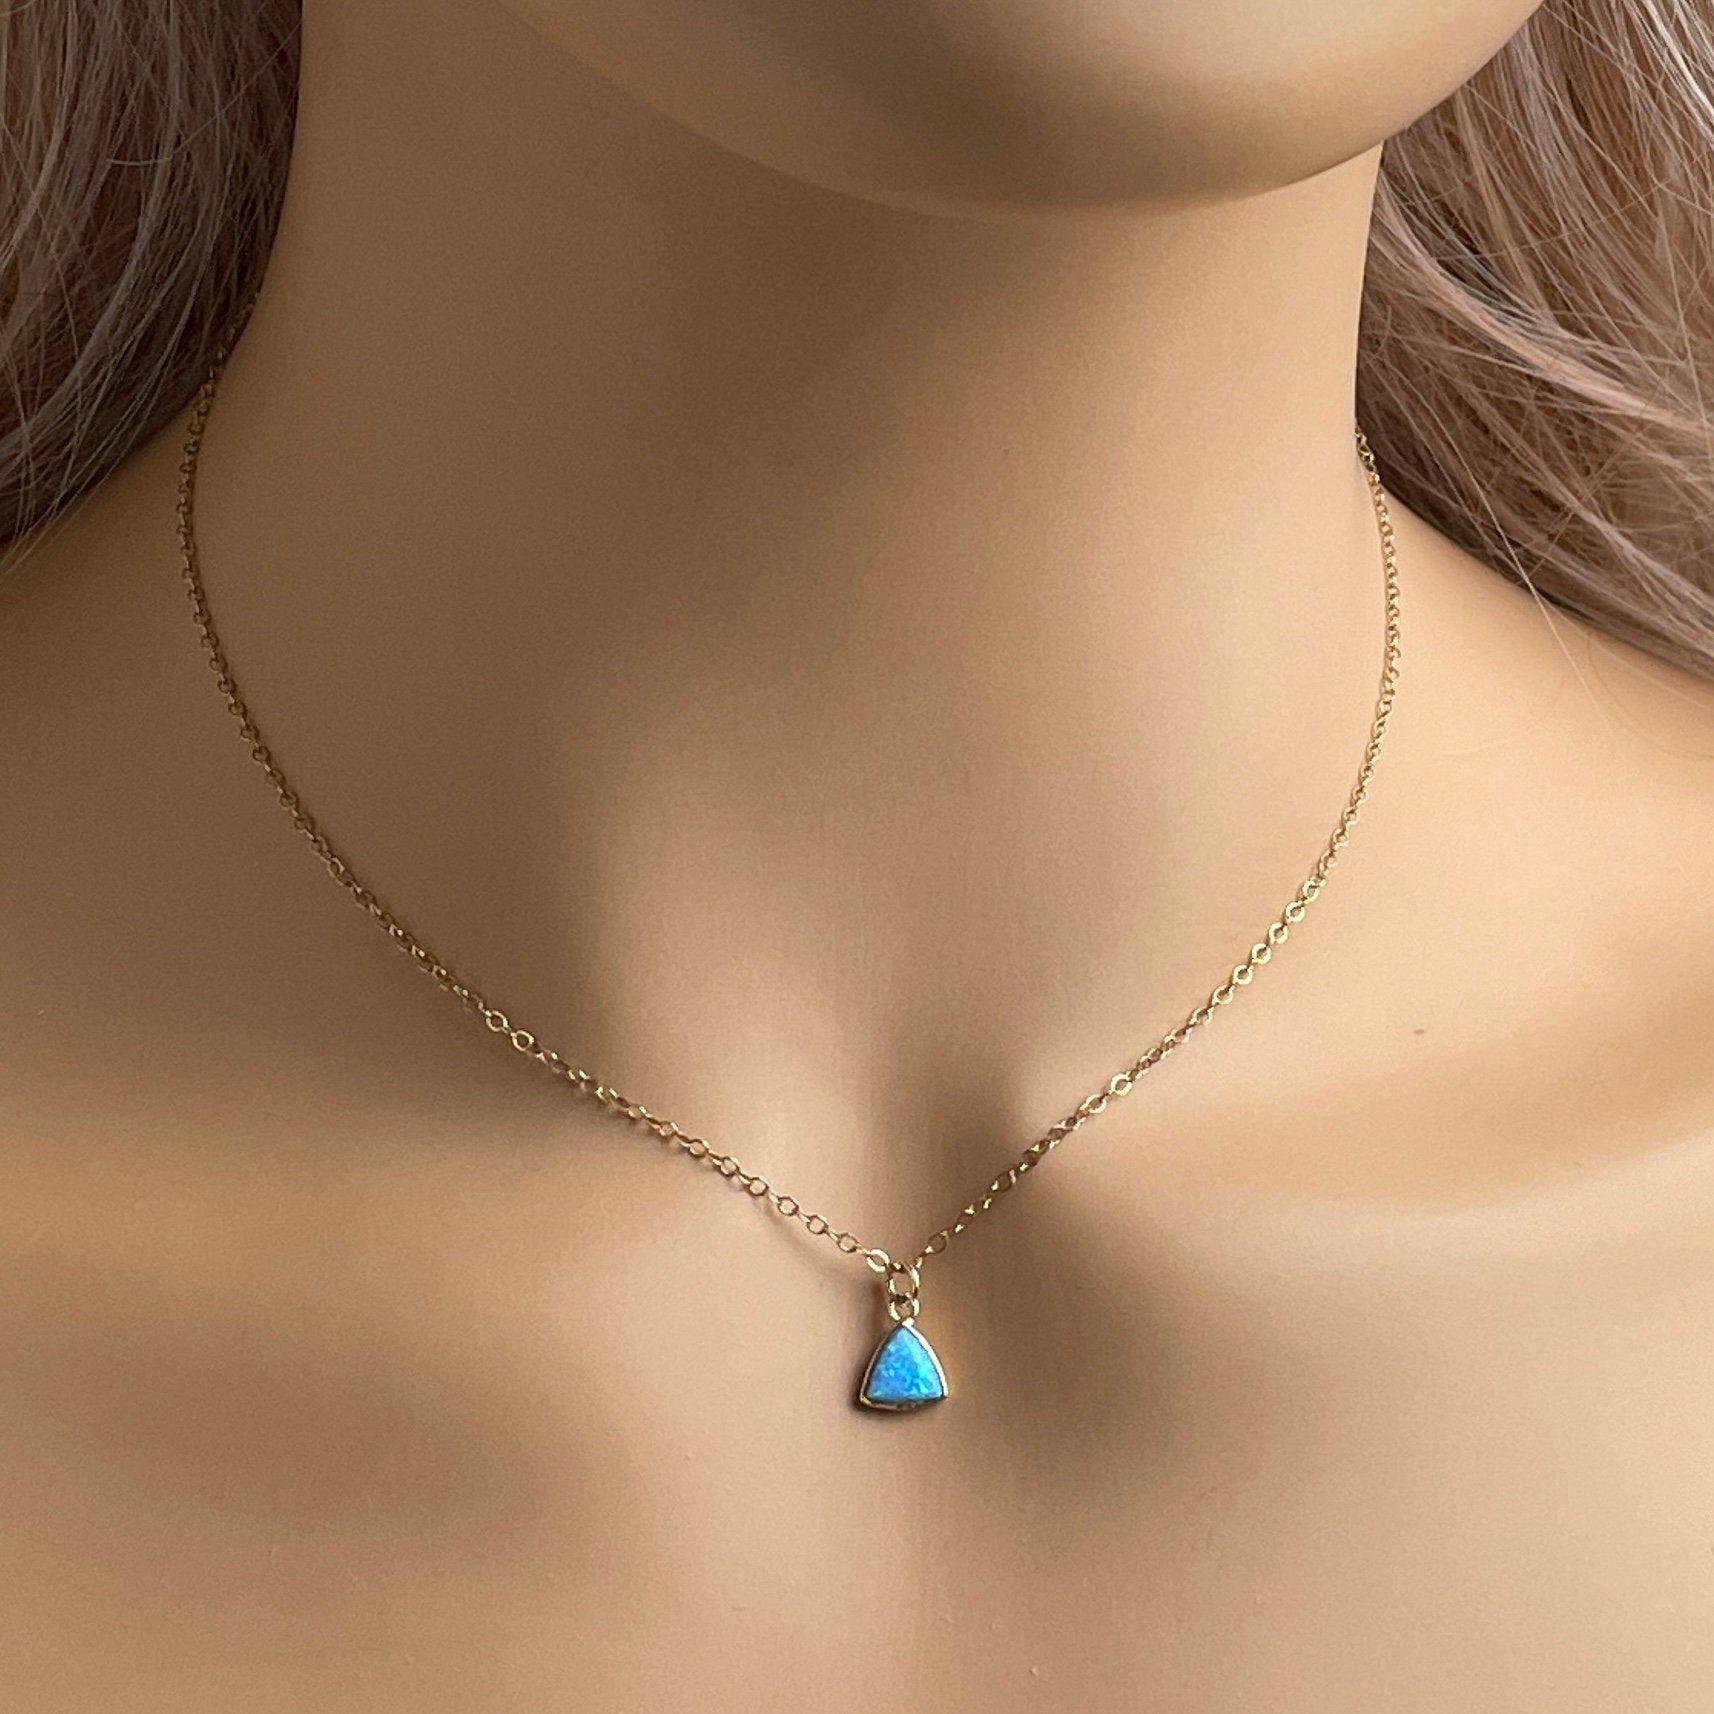 Blue Opal Necklace, 16.5 Inches Long – Kathy Bankston